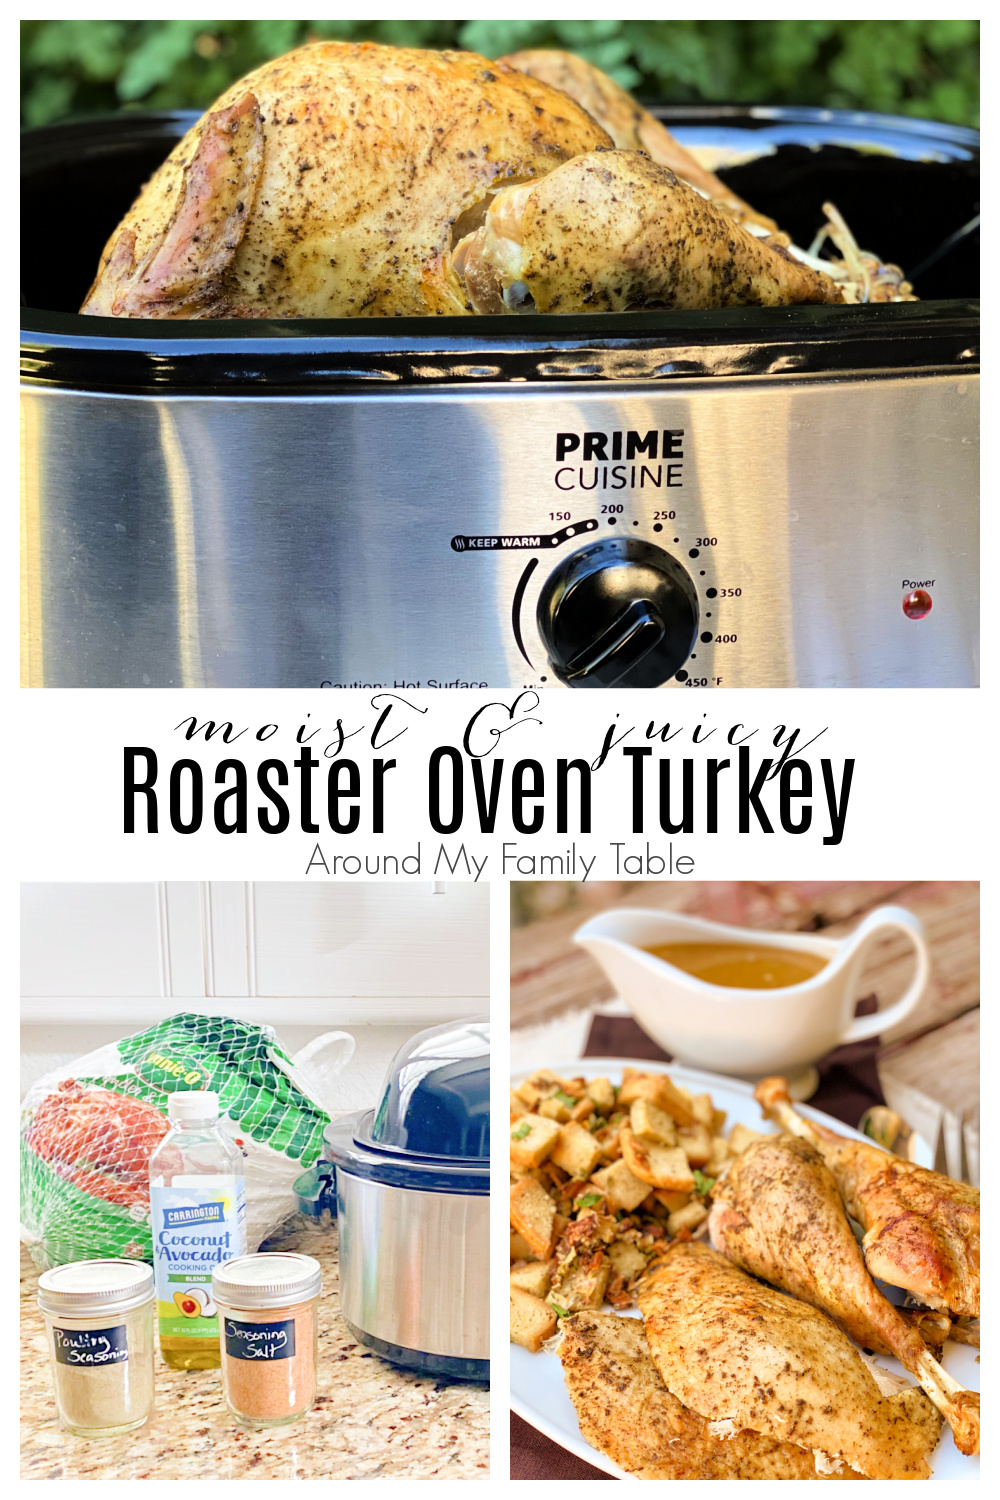 https://www.aroundmyfamilytable.com/wp-content/uploads/2021/11/roaster-oven-turkey_collage.jpeg